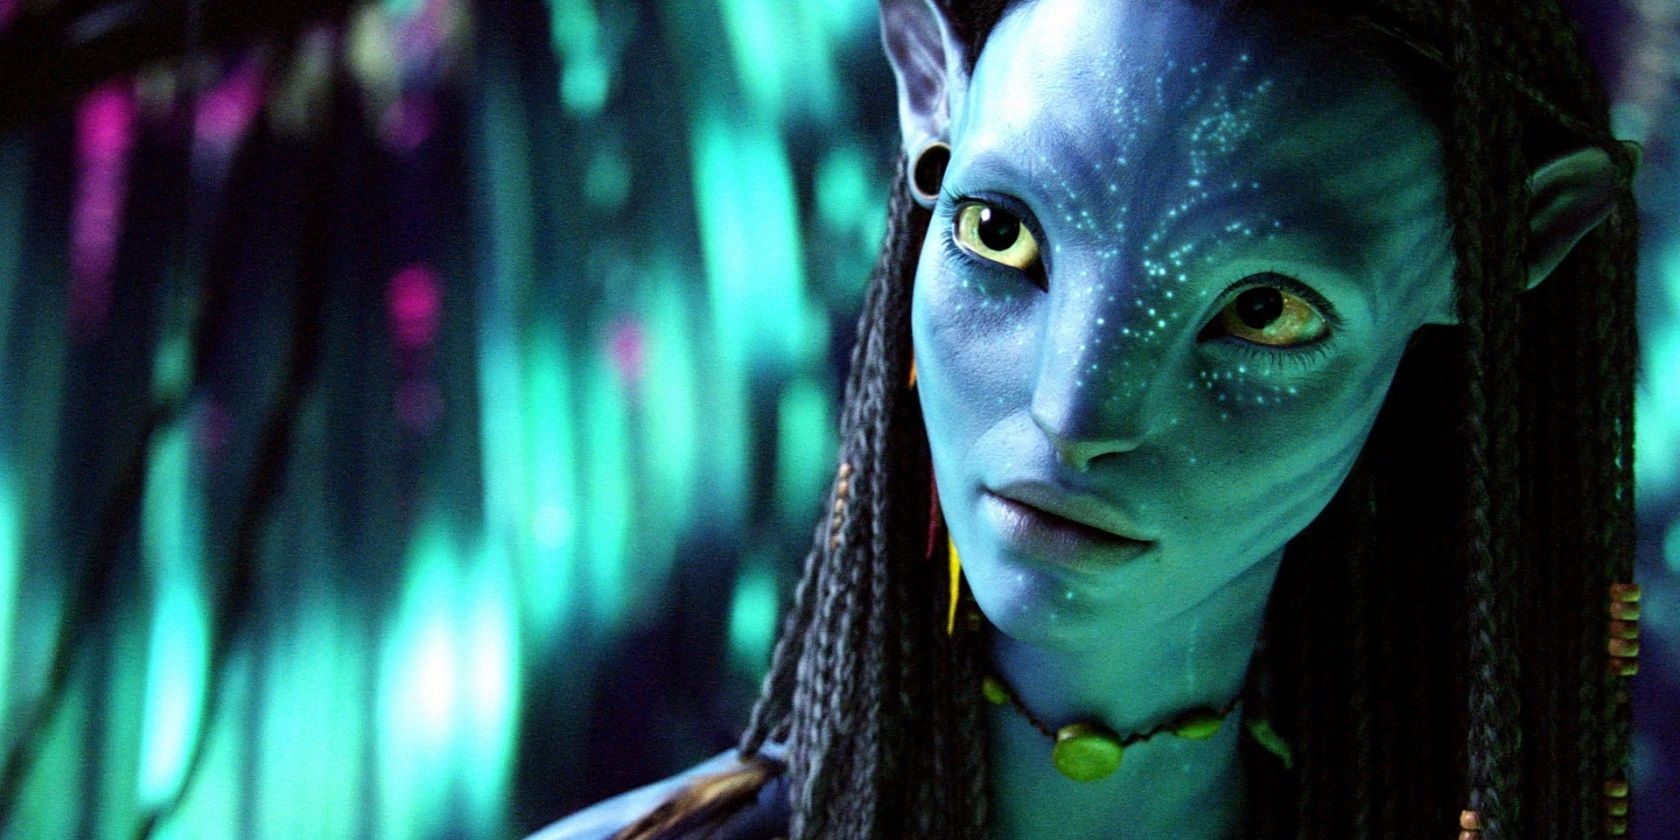 Zoe Saldana as Neytiri in the jungle in Avatar